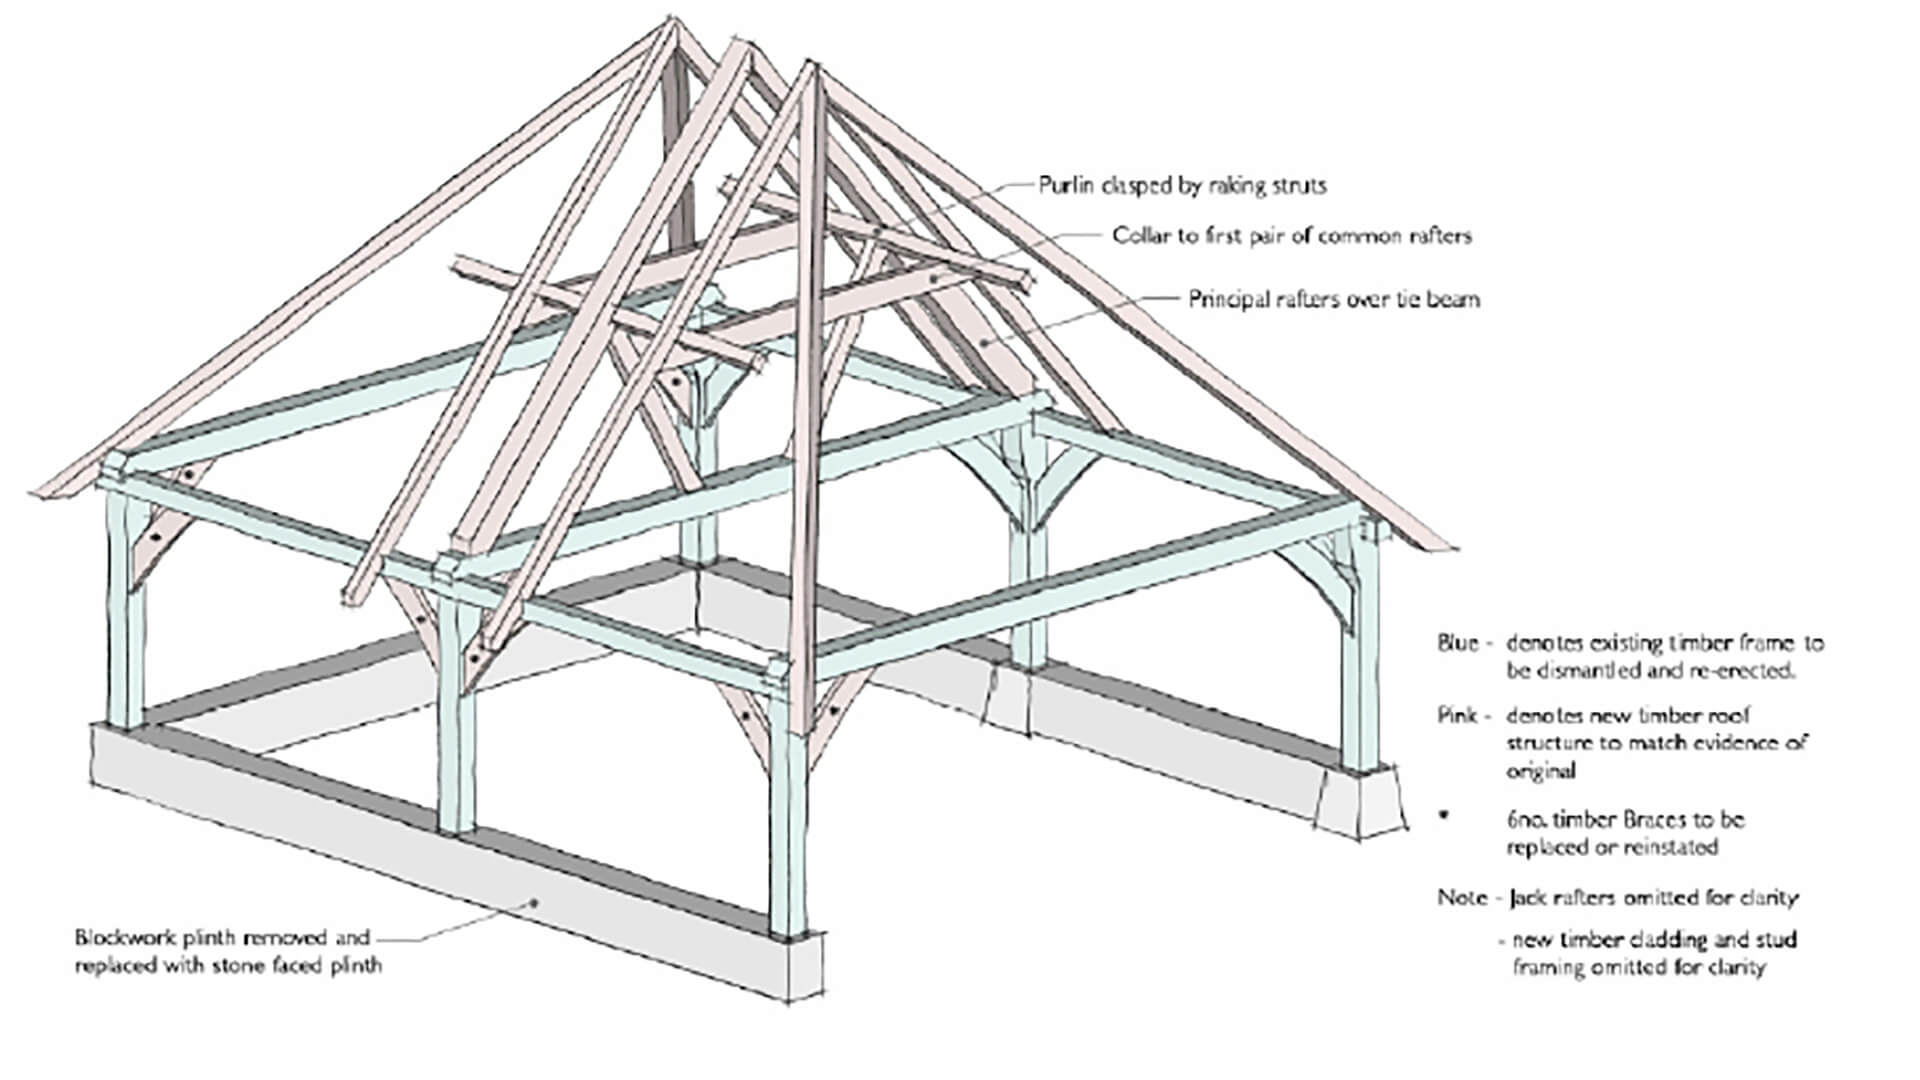 Sketch of rafter repairs to cart barn